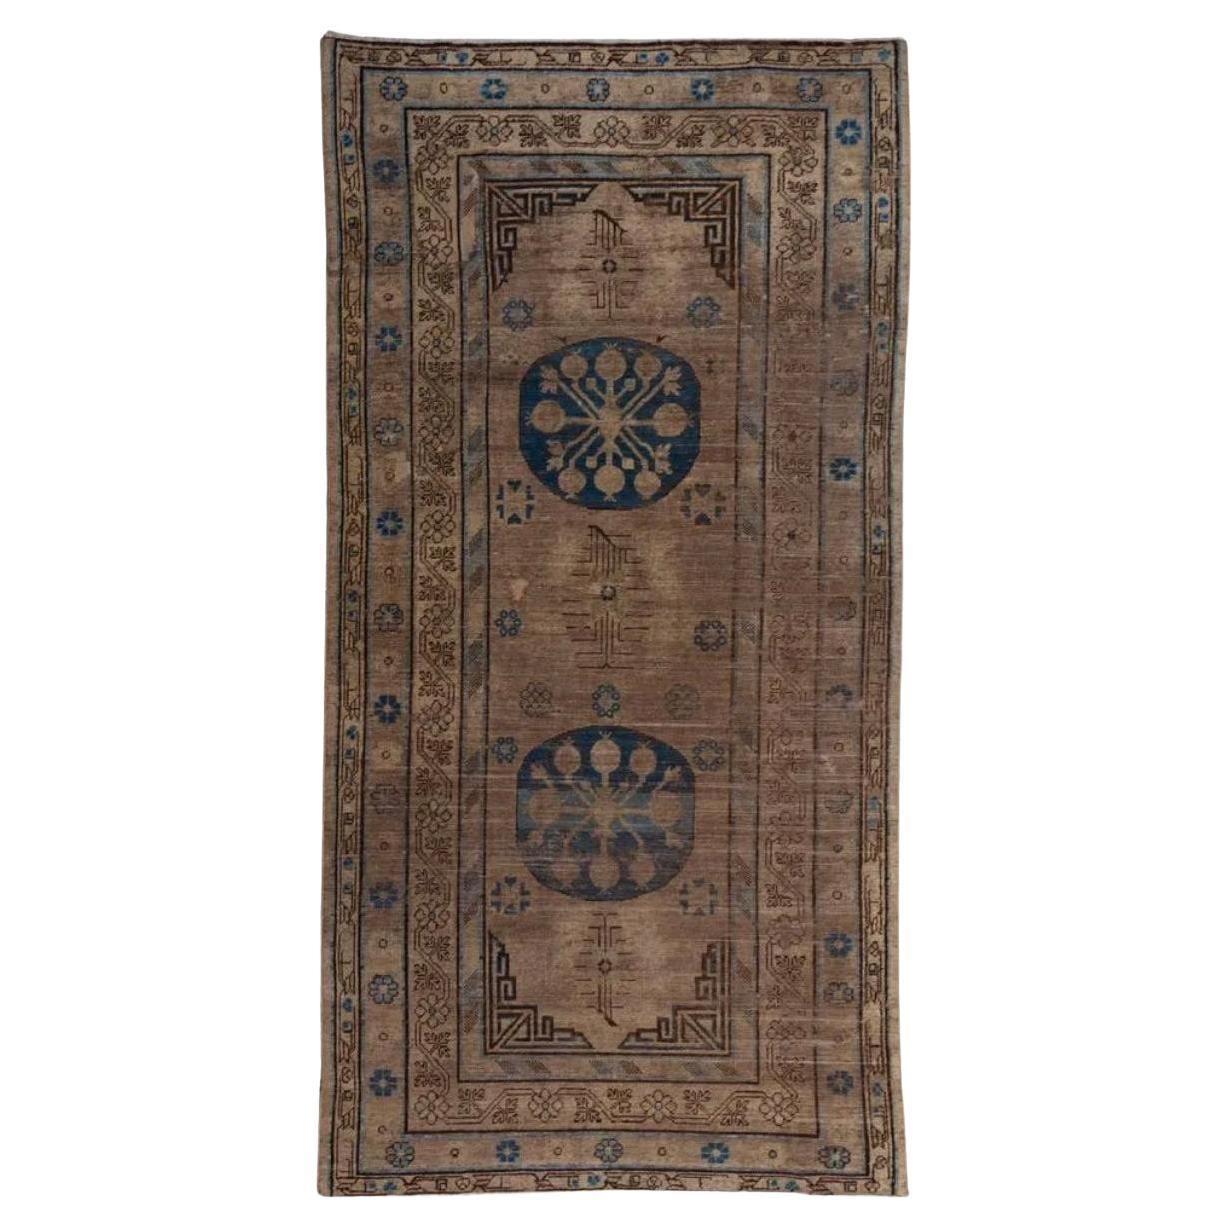 Samarkand Khotan Double-Medallion Wool Carpet (9' 3" x 4' 7") For Sale